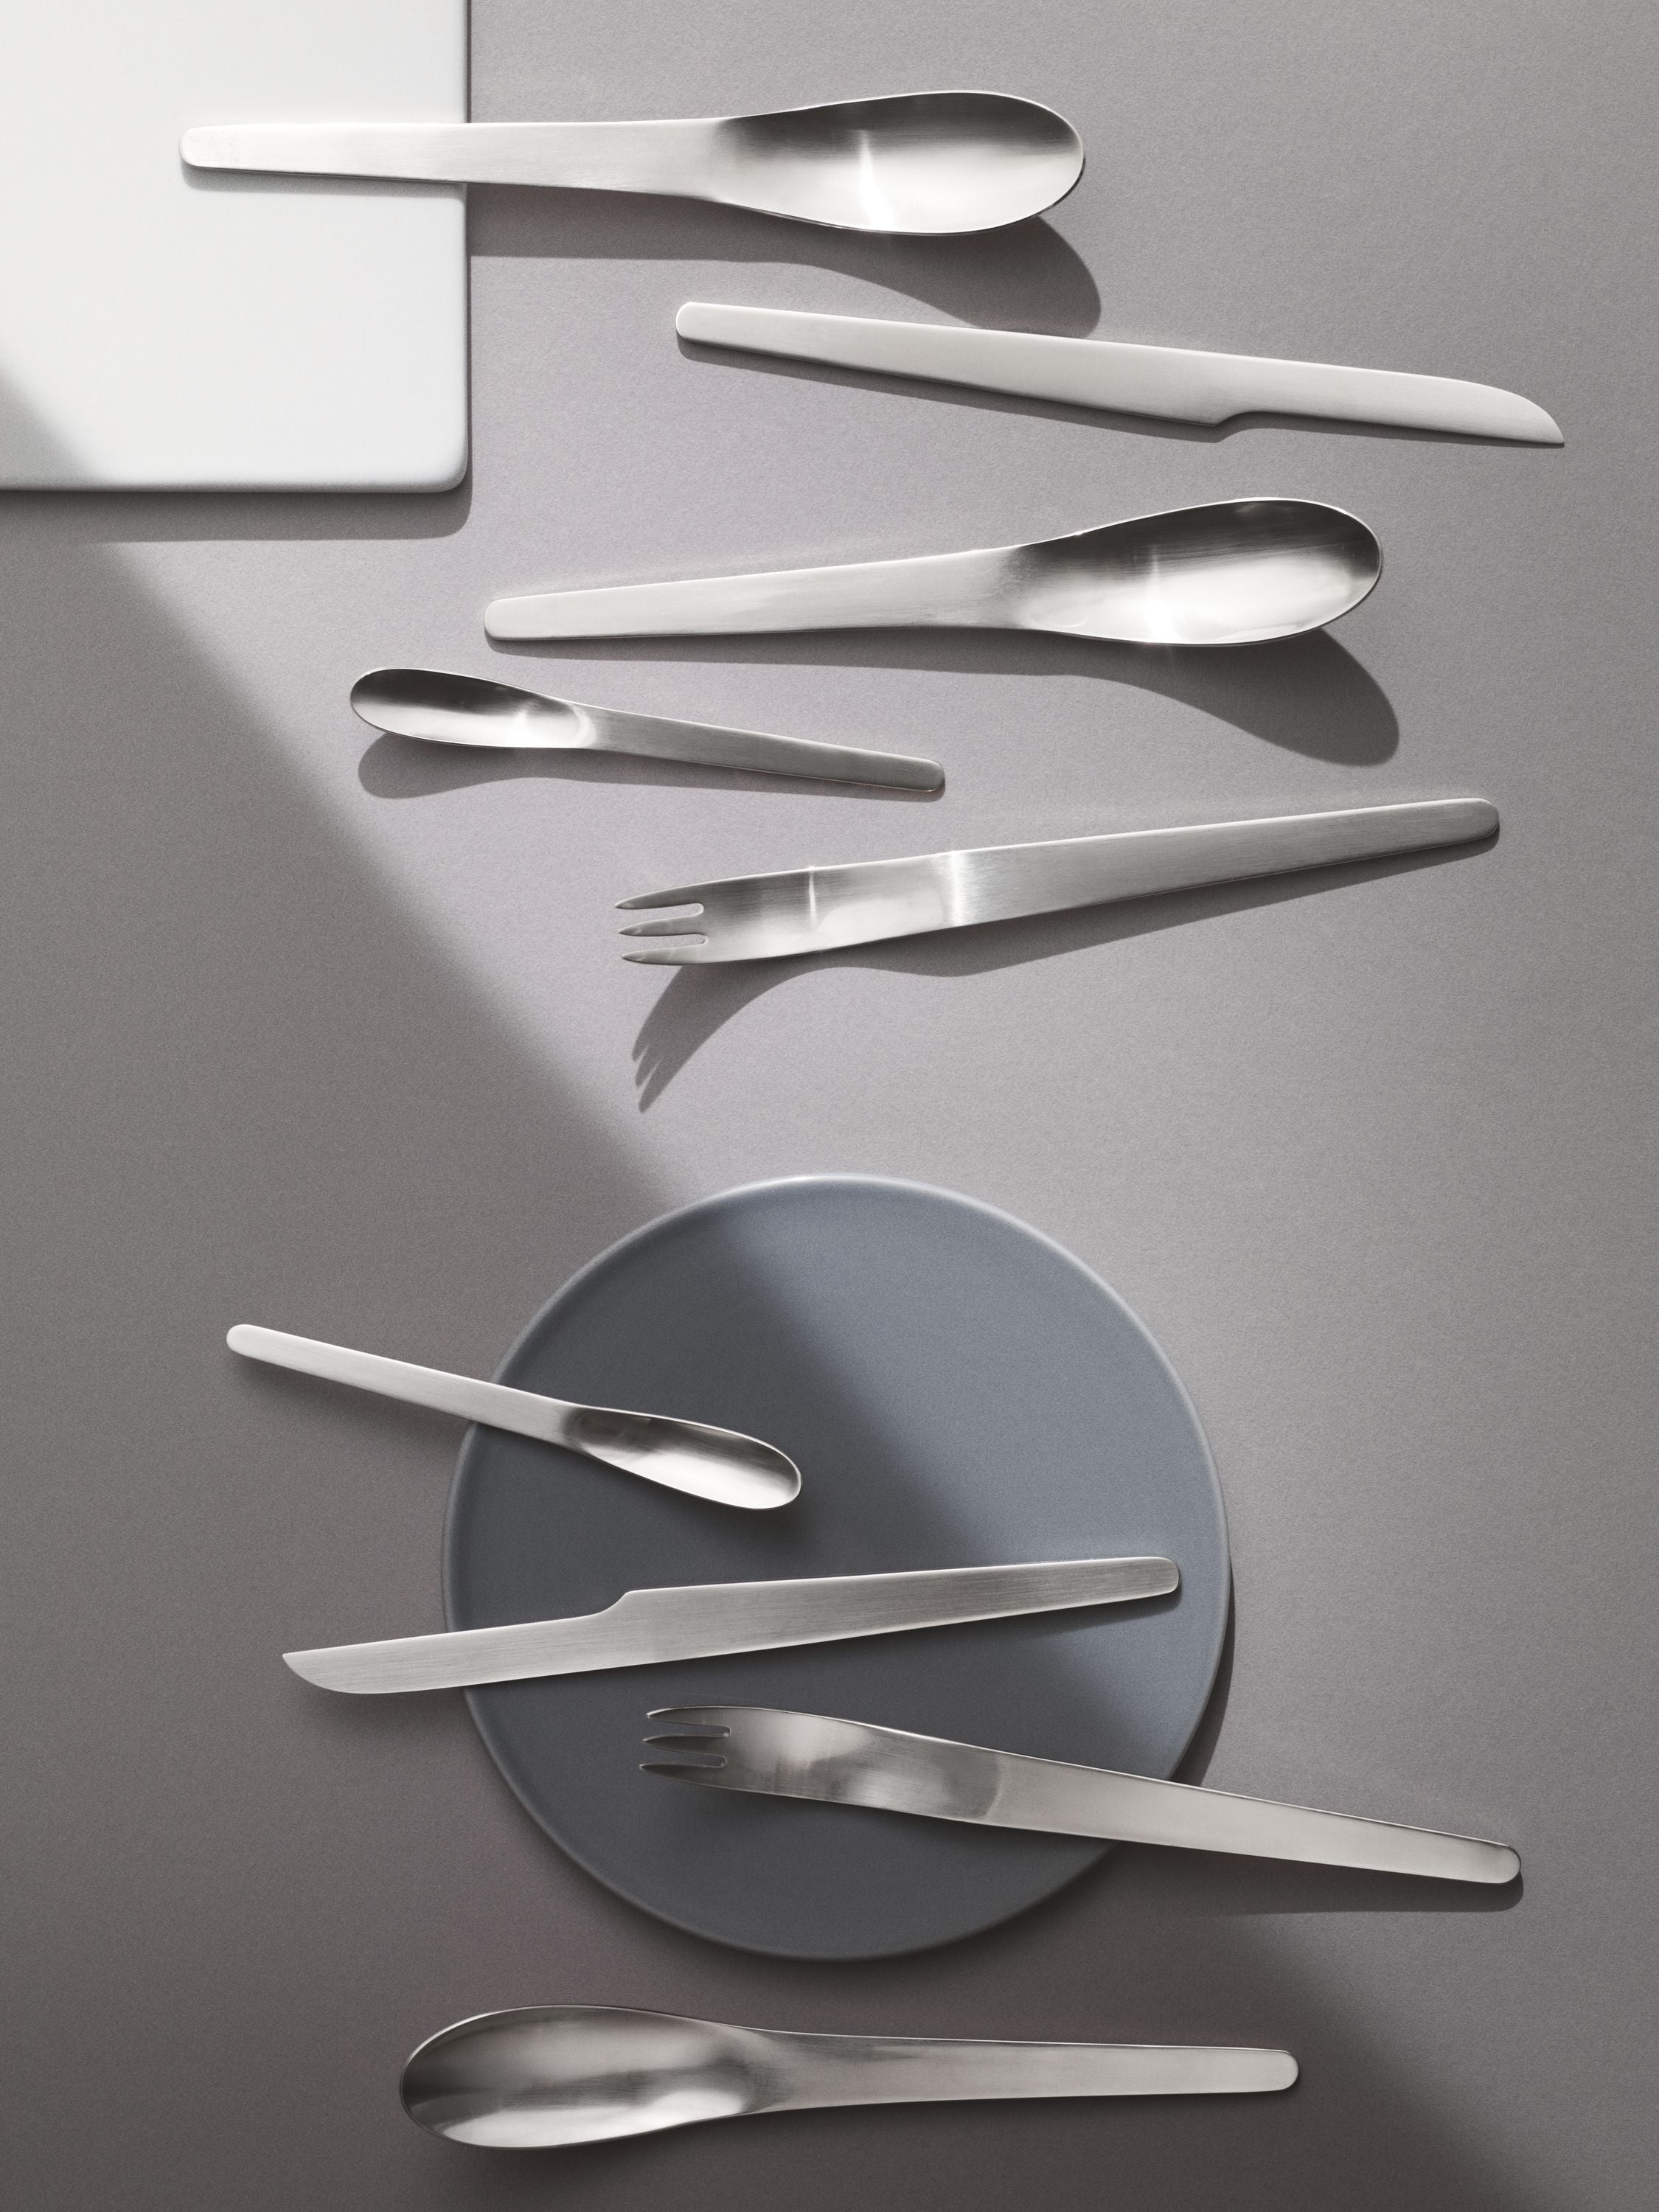 Georg Jensen Arne Jacobsen Cutlery, 24 kusů